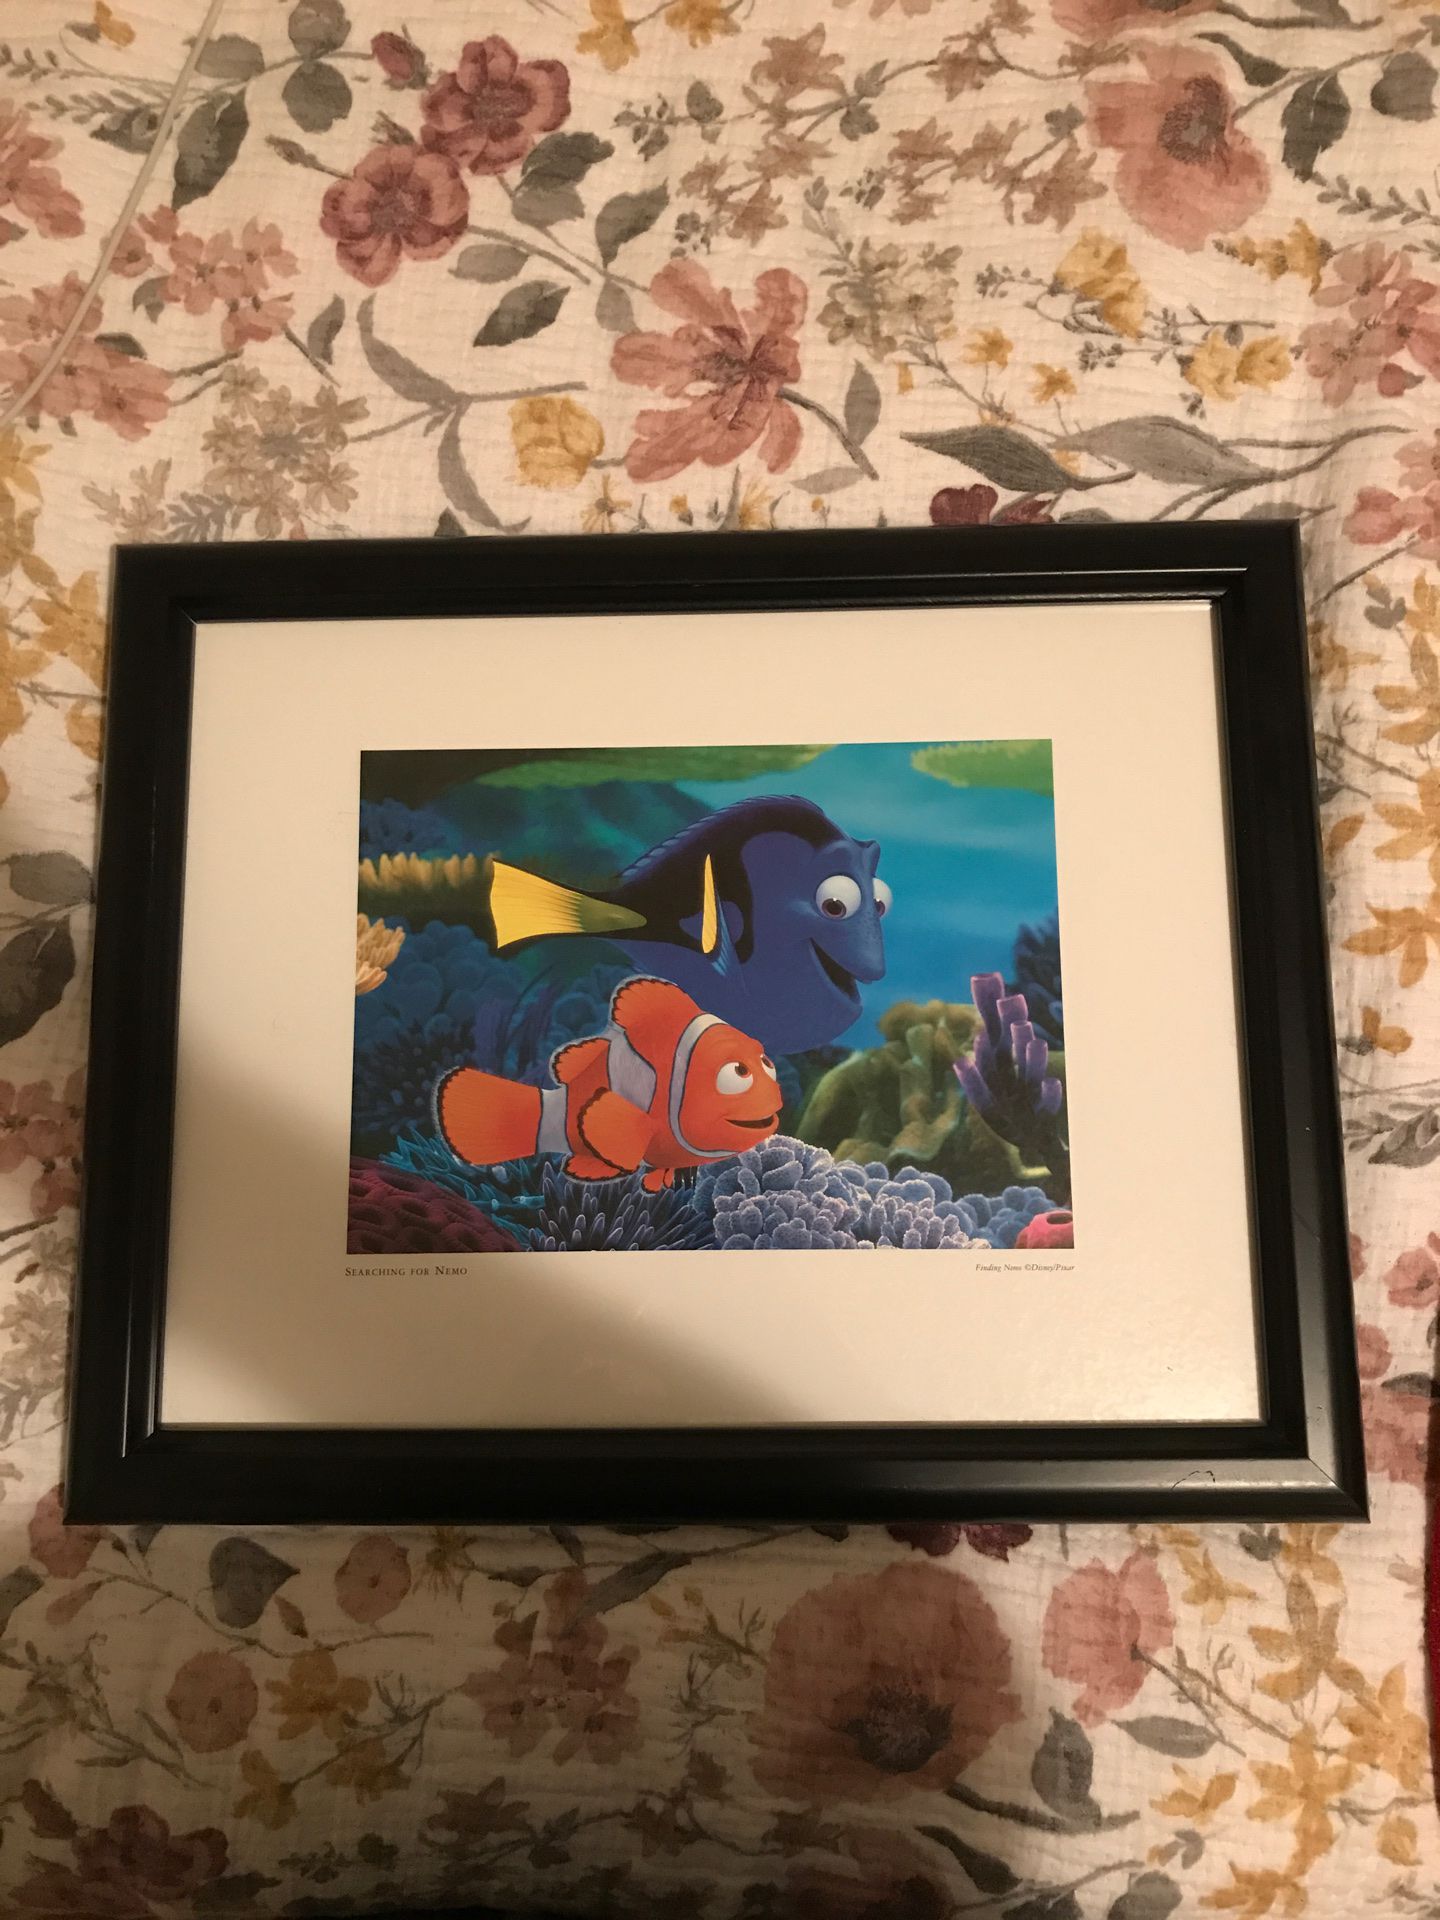 Finding Nemo movie frame